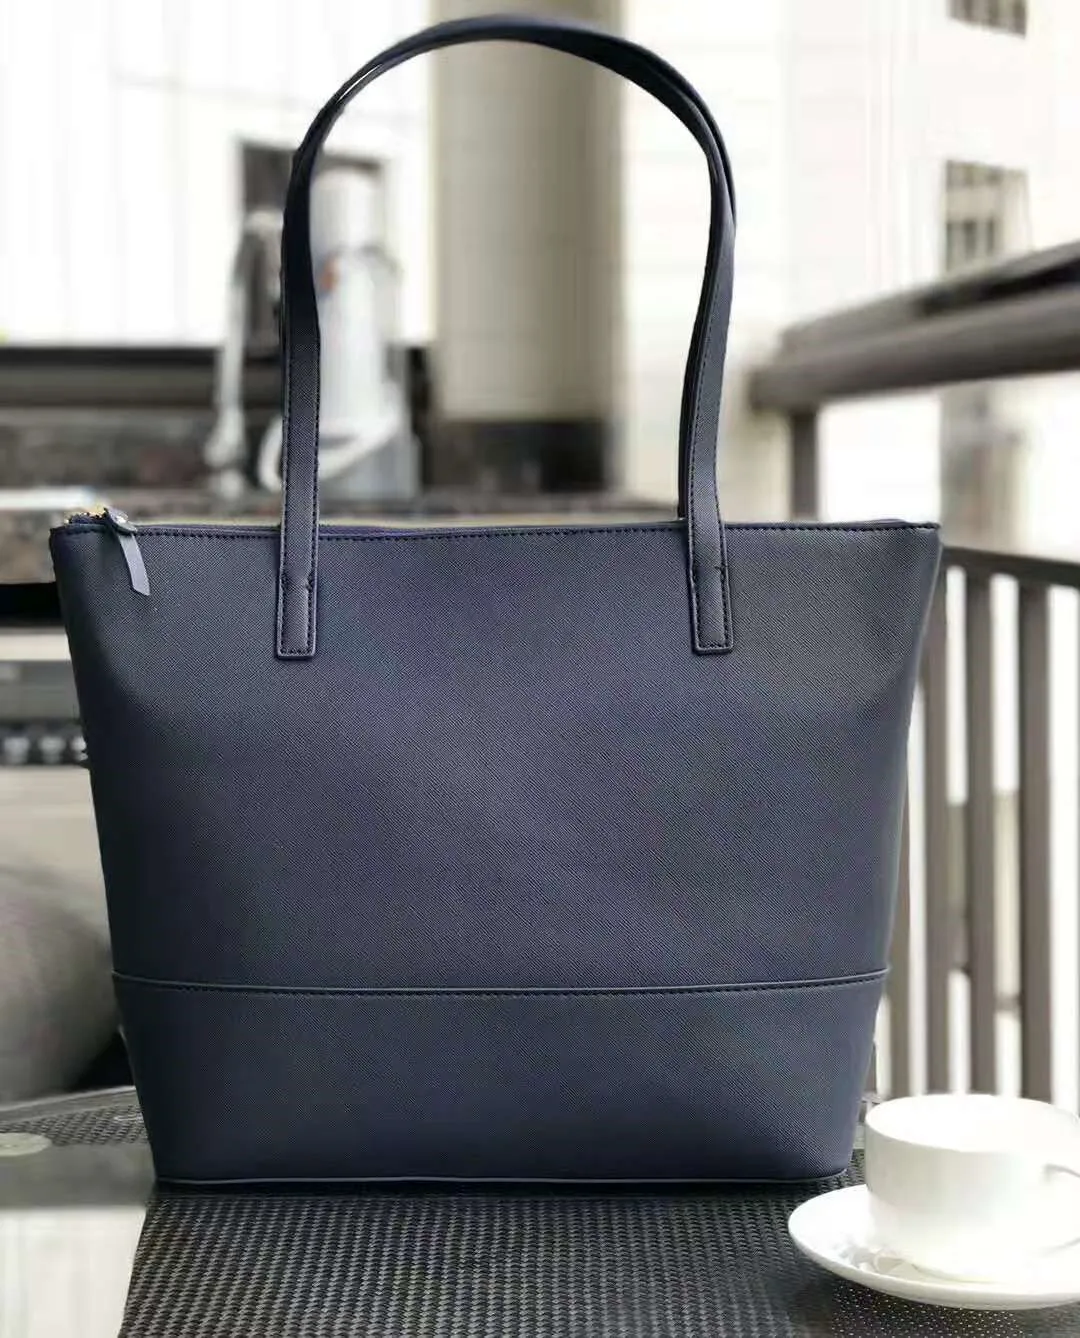 Popular fashion European and American simple horizontal style large shopping bag shoulder bag women handbag casual bag - Цвет: navy blue